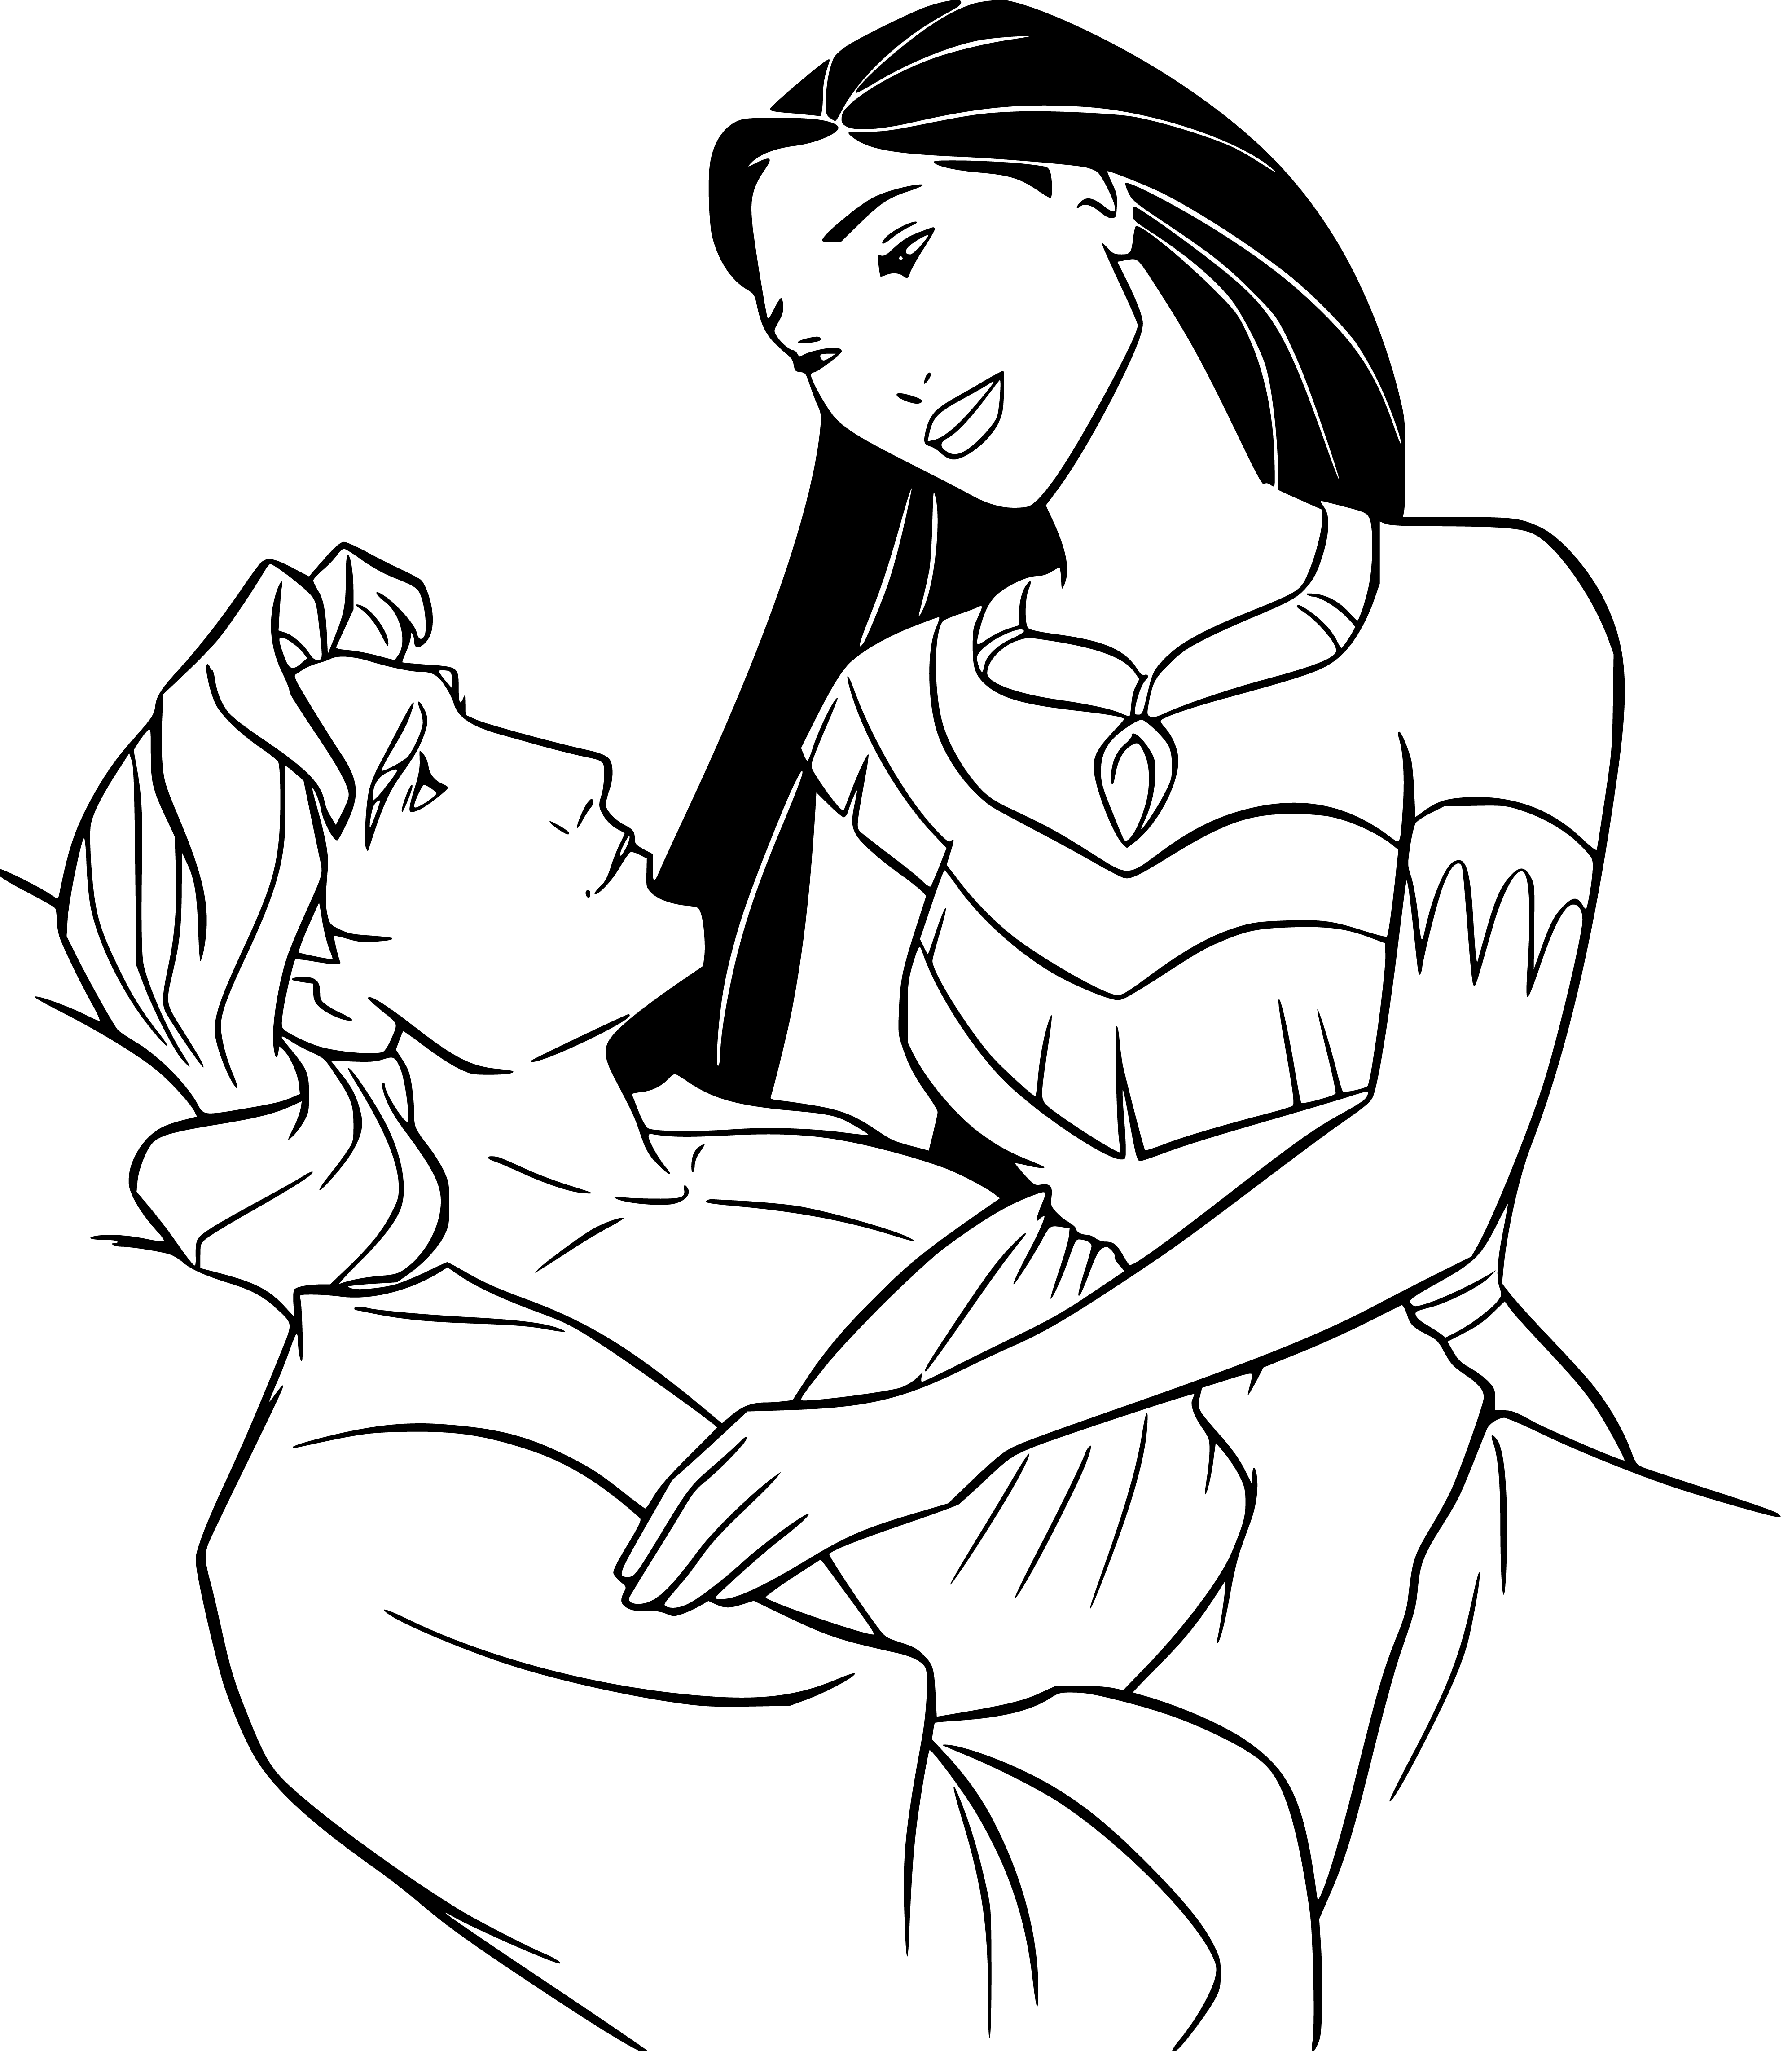 Printable John and Pocahontas Love Coloring Page for kids.